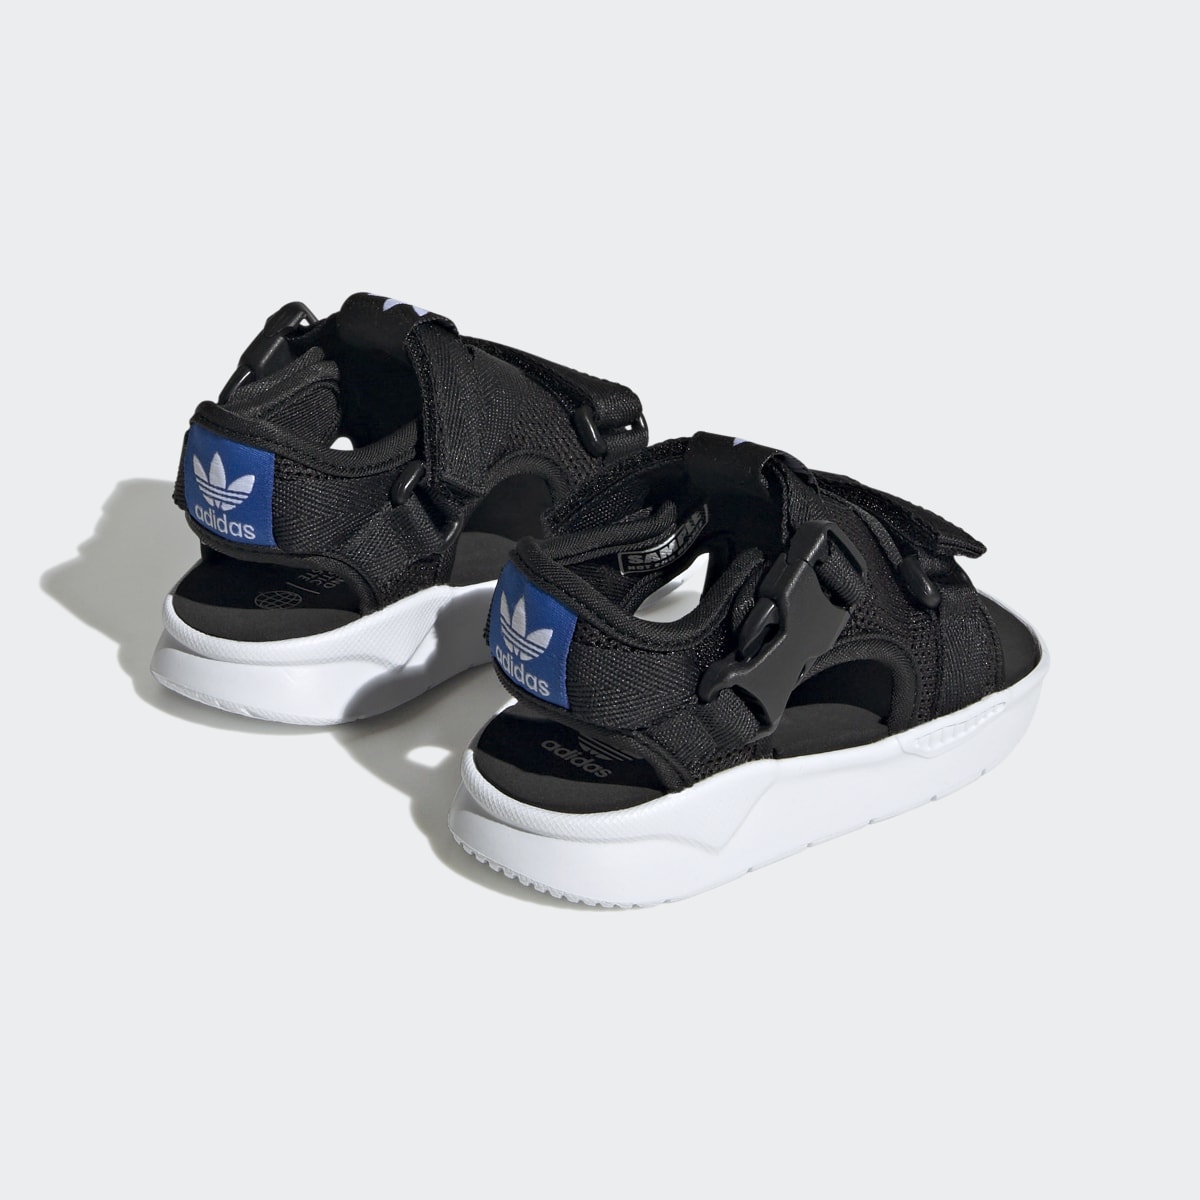 Adidas 360 3.0 Sandals. 6